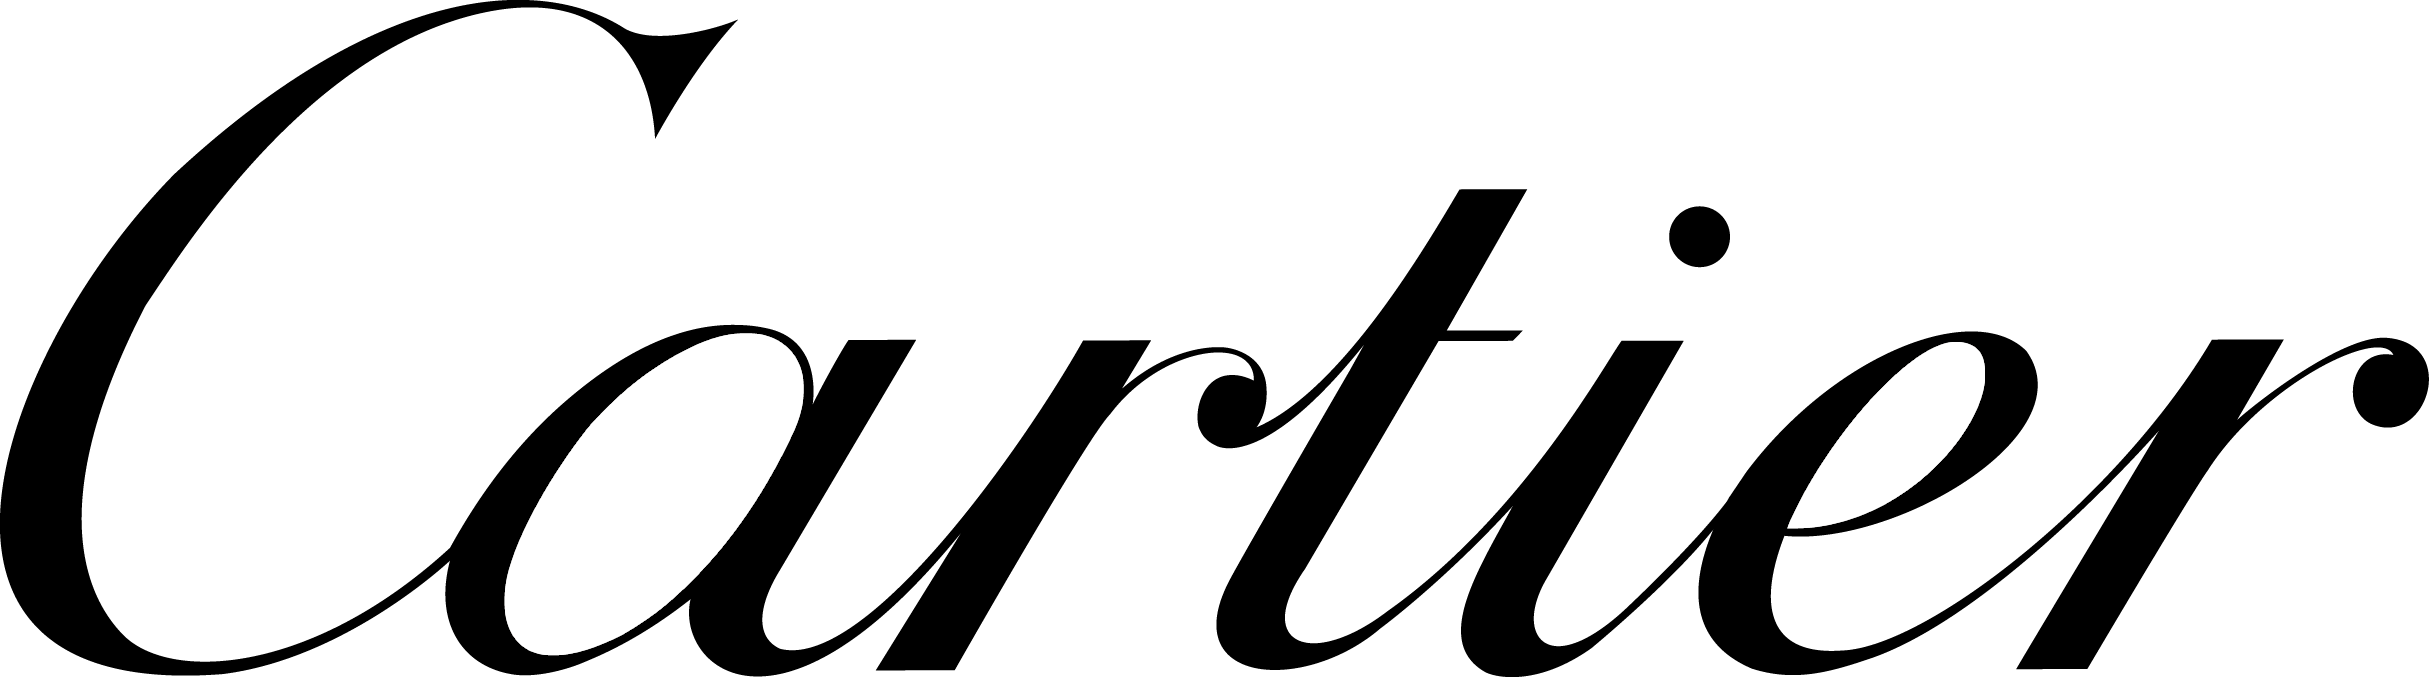 cartier logo anhänger